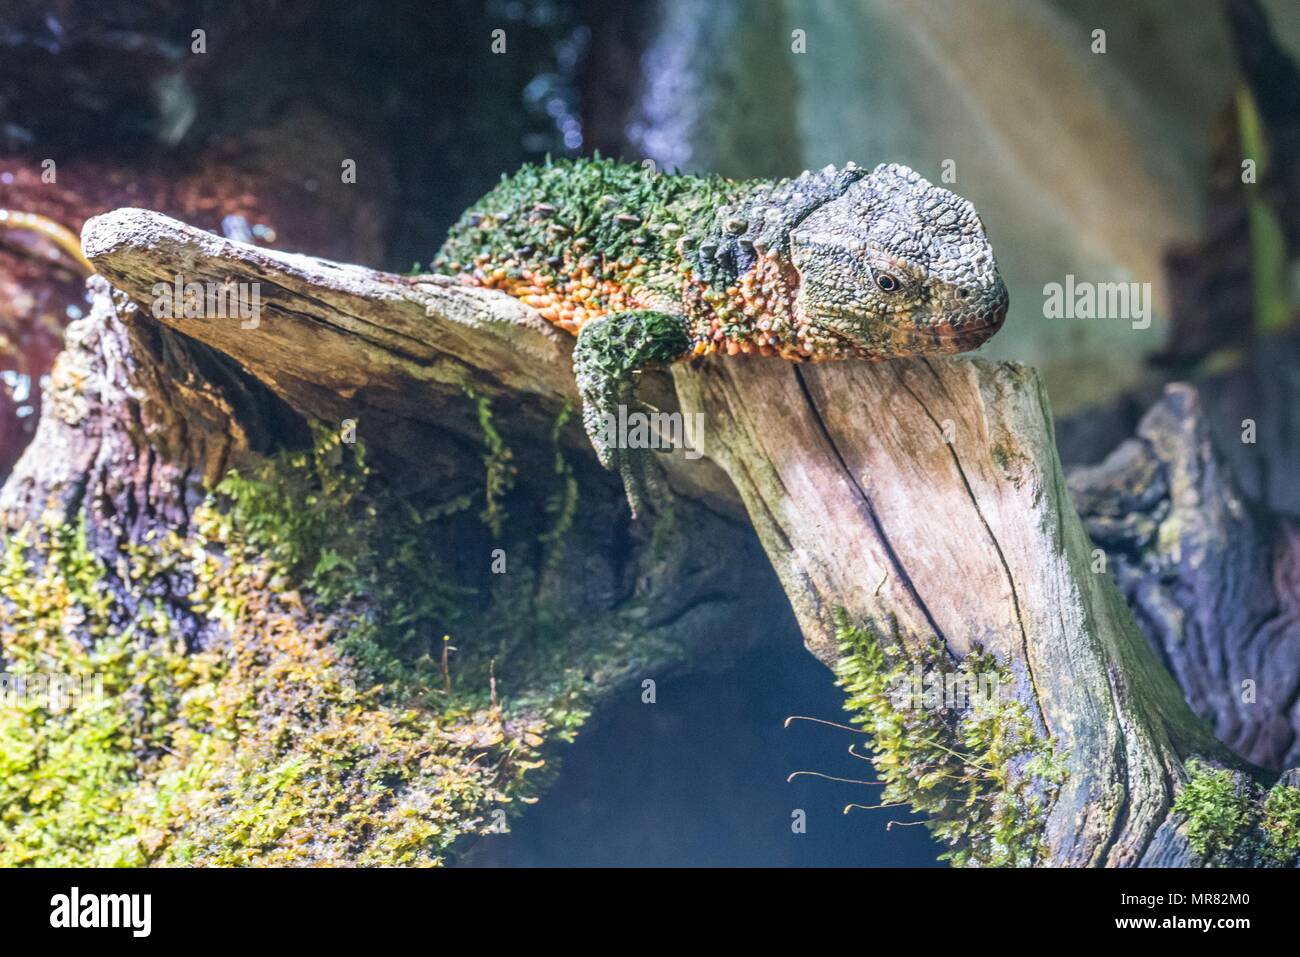 Crocodile lizard in a terrarium Stock Photo